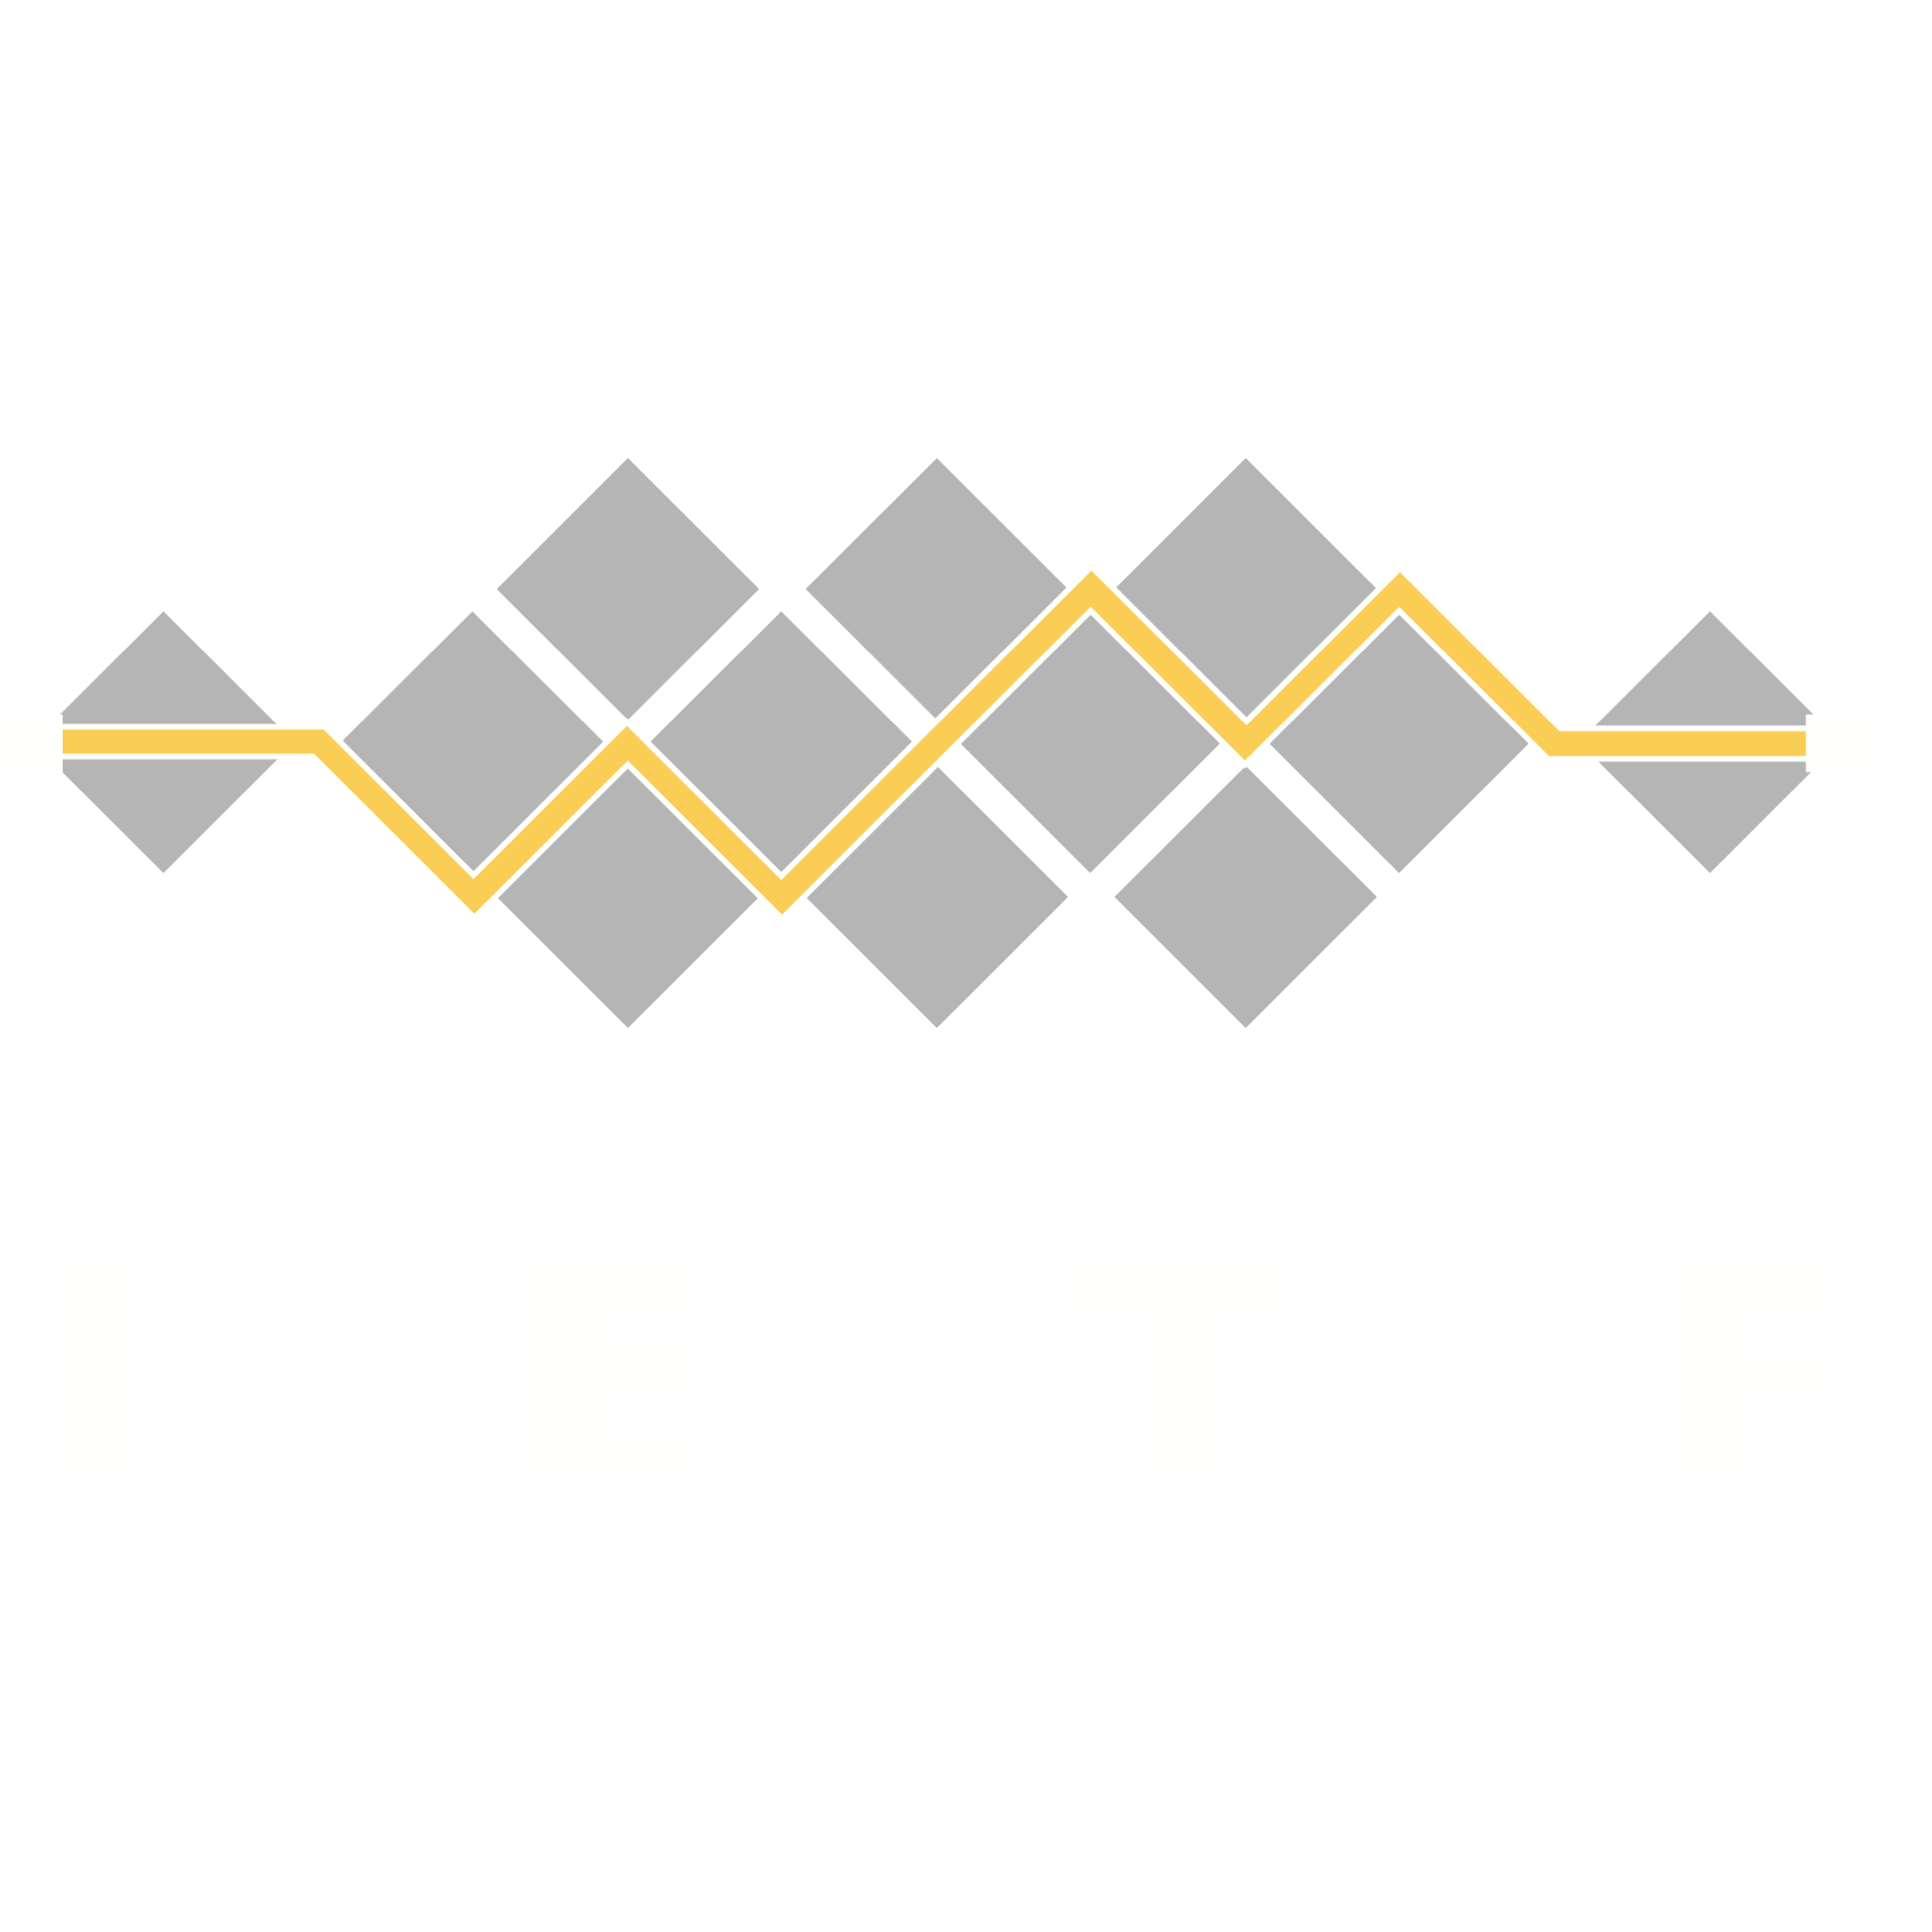 ietf-logo-reversed-square-300dpi-transparent-background.png